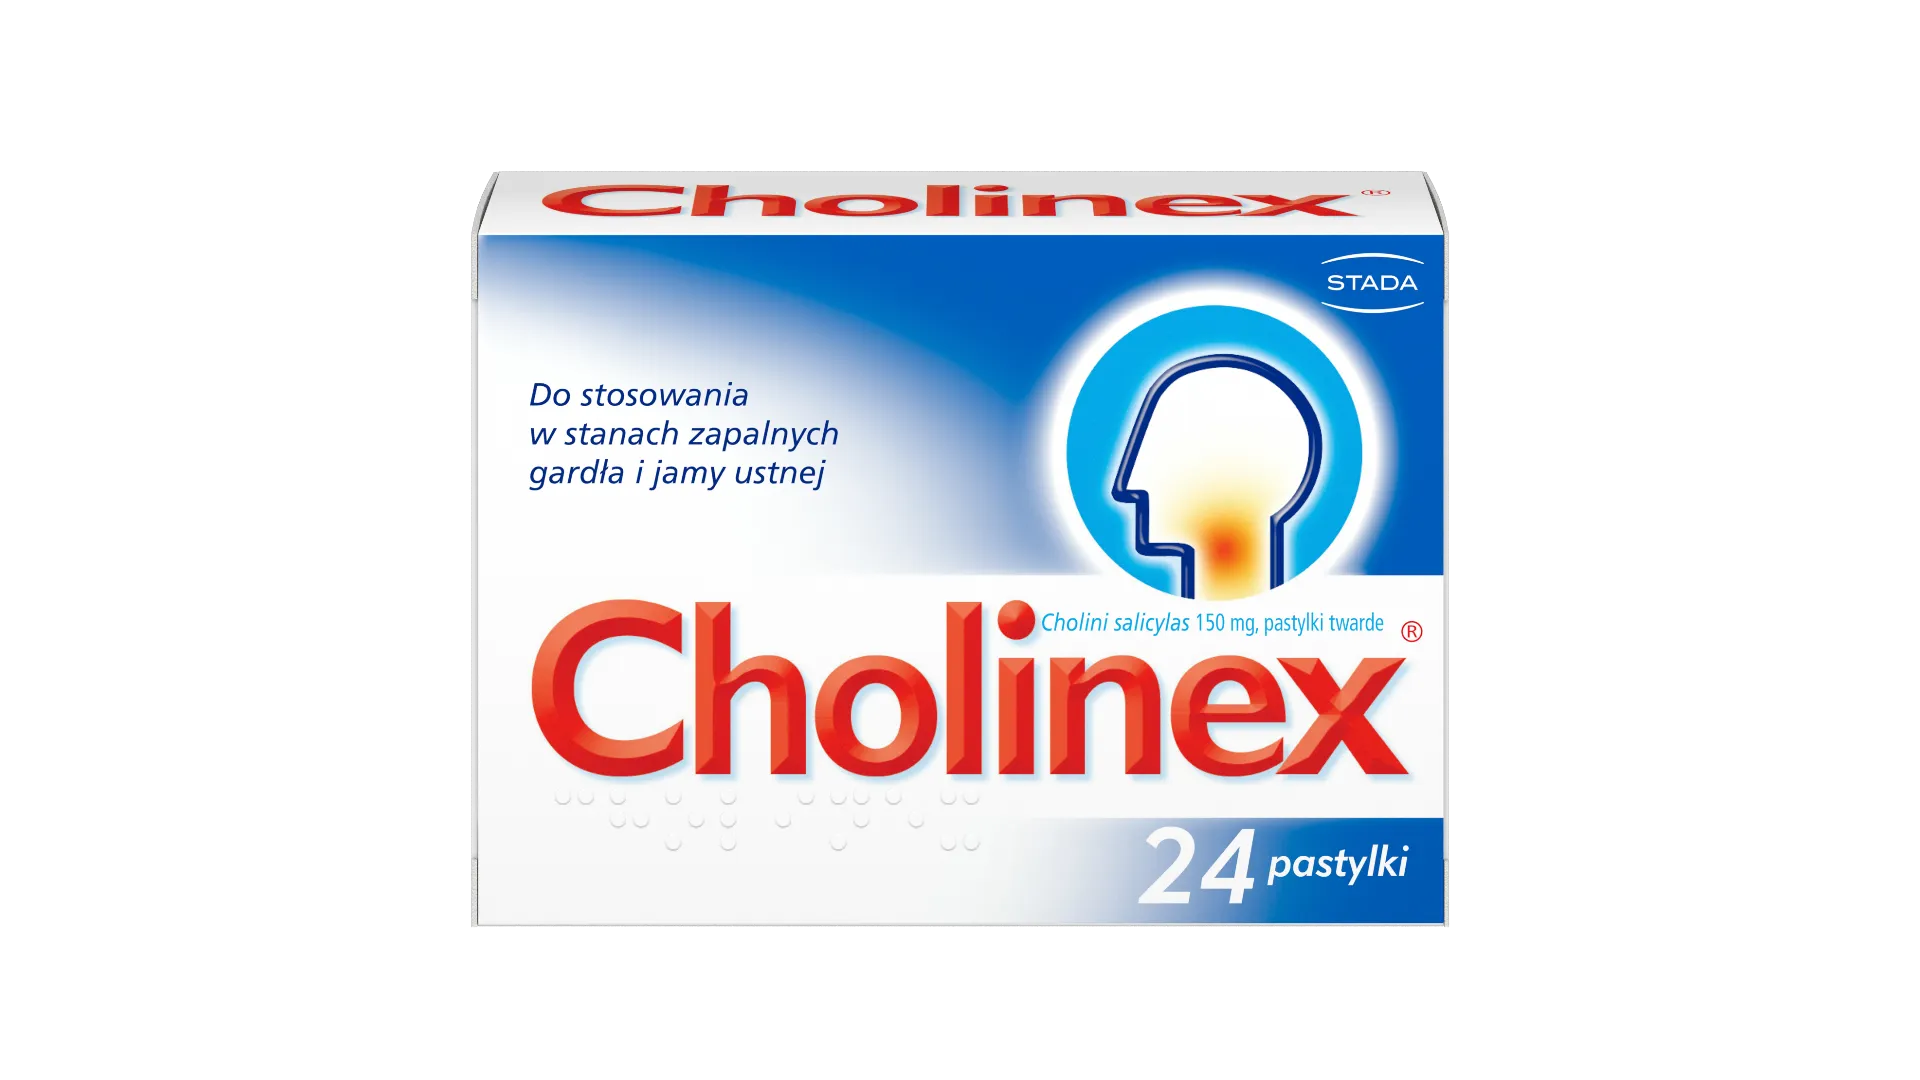 Cholinex, 24 pastylki twarde